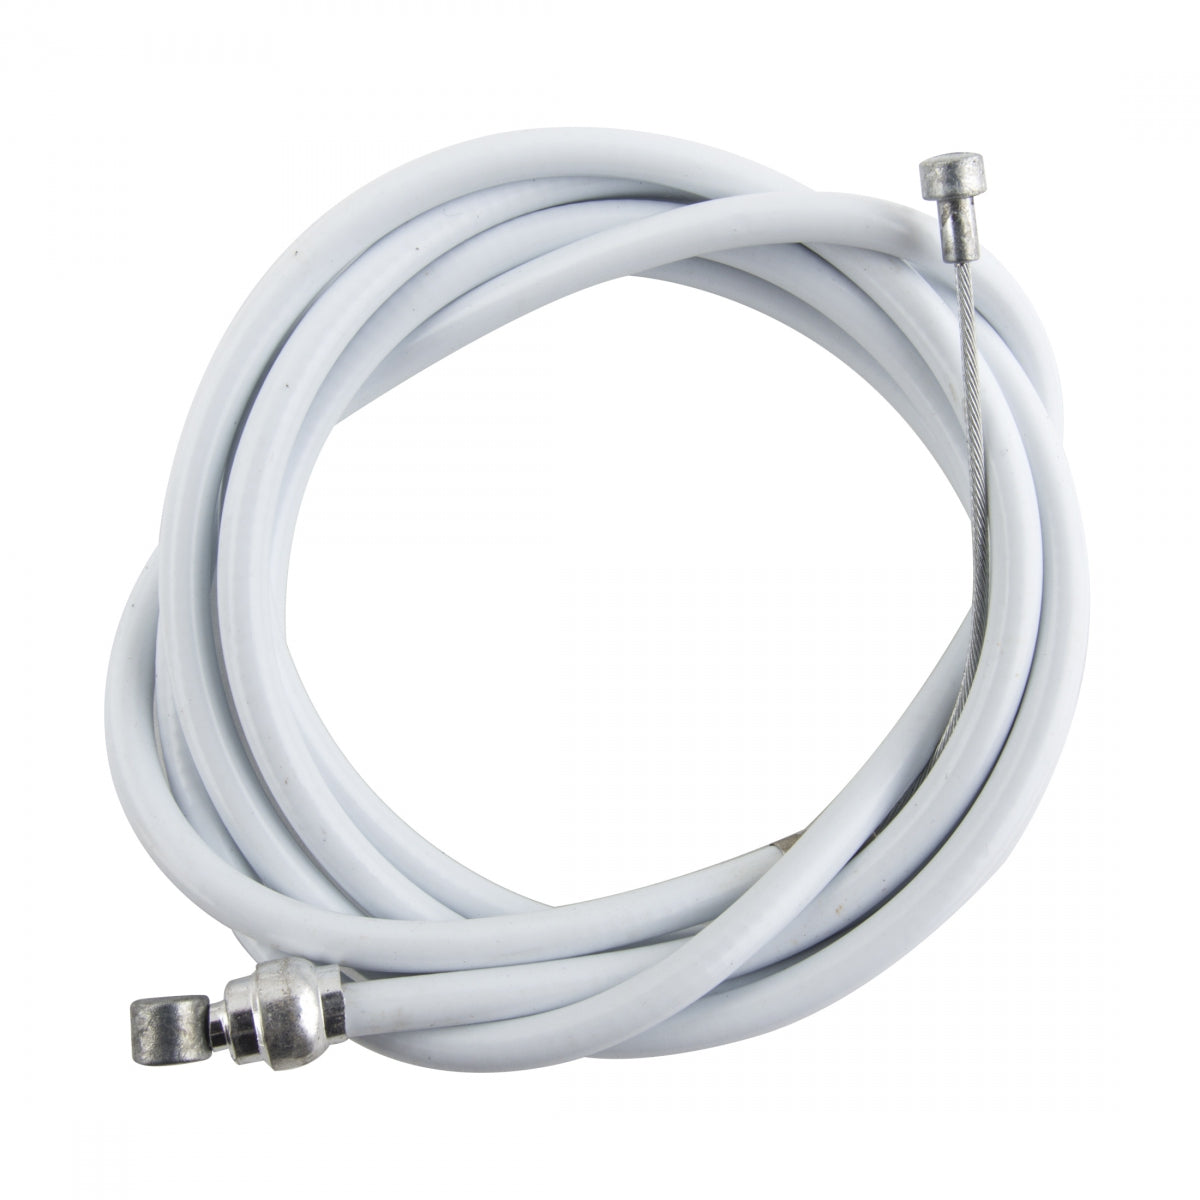 Sunlite Slick Brake Cable, 60 x 65, White